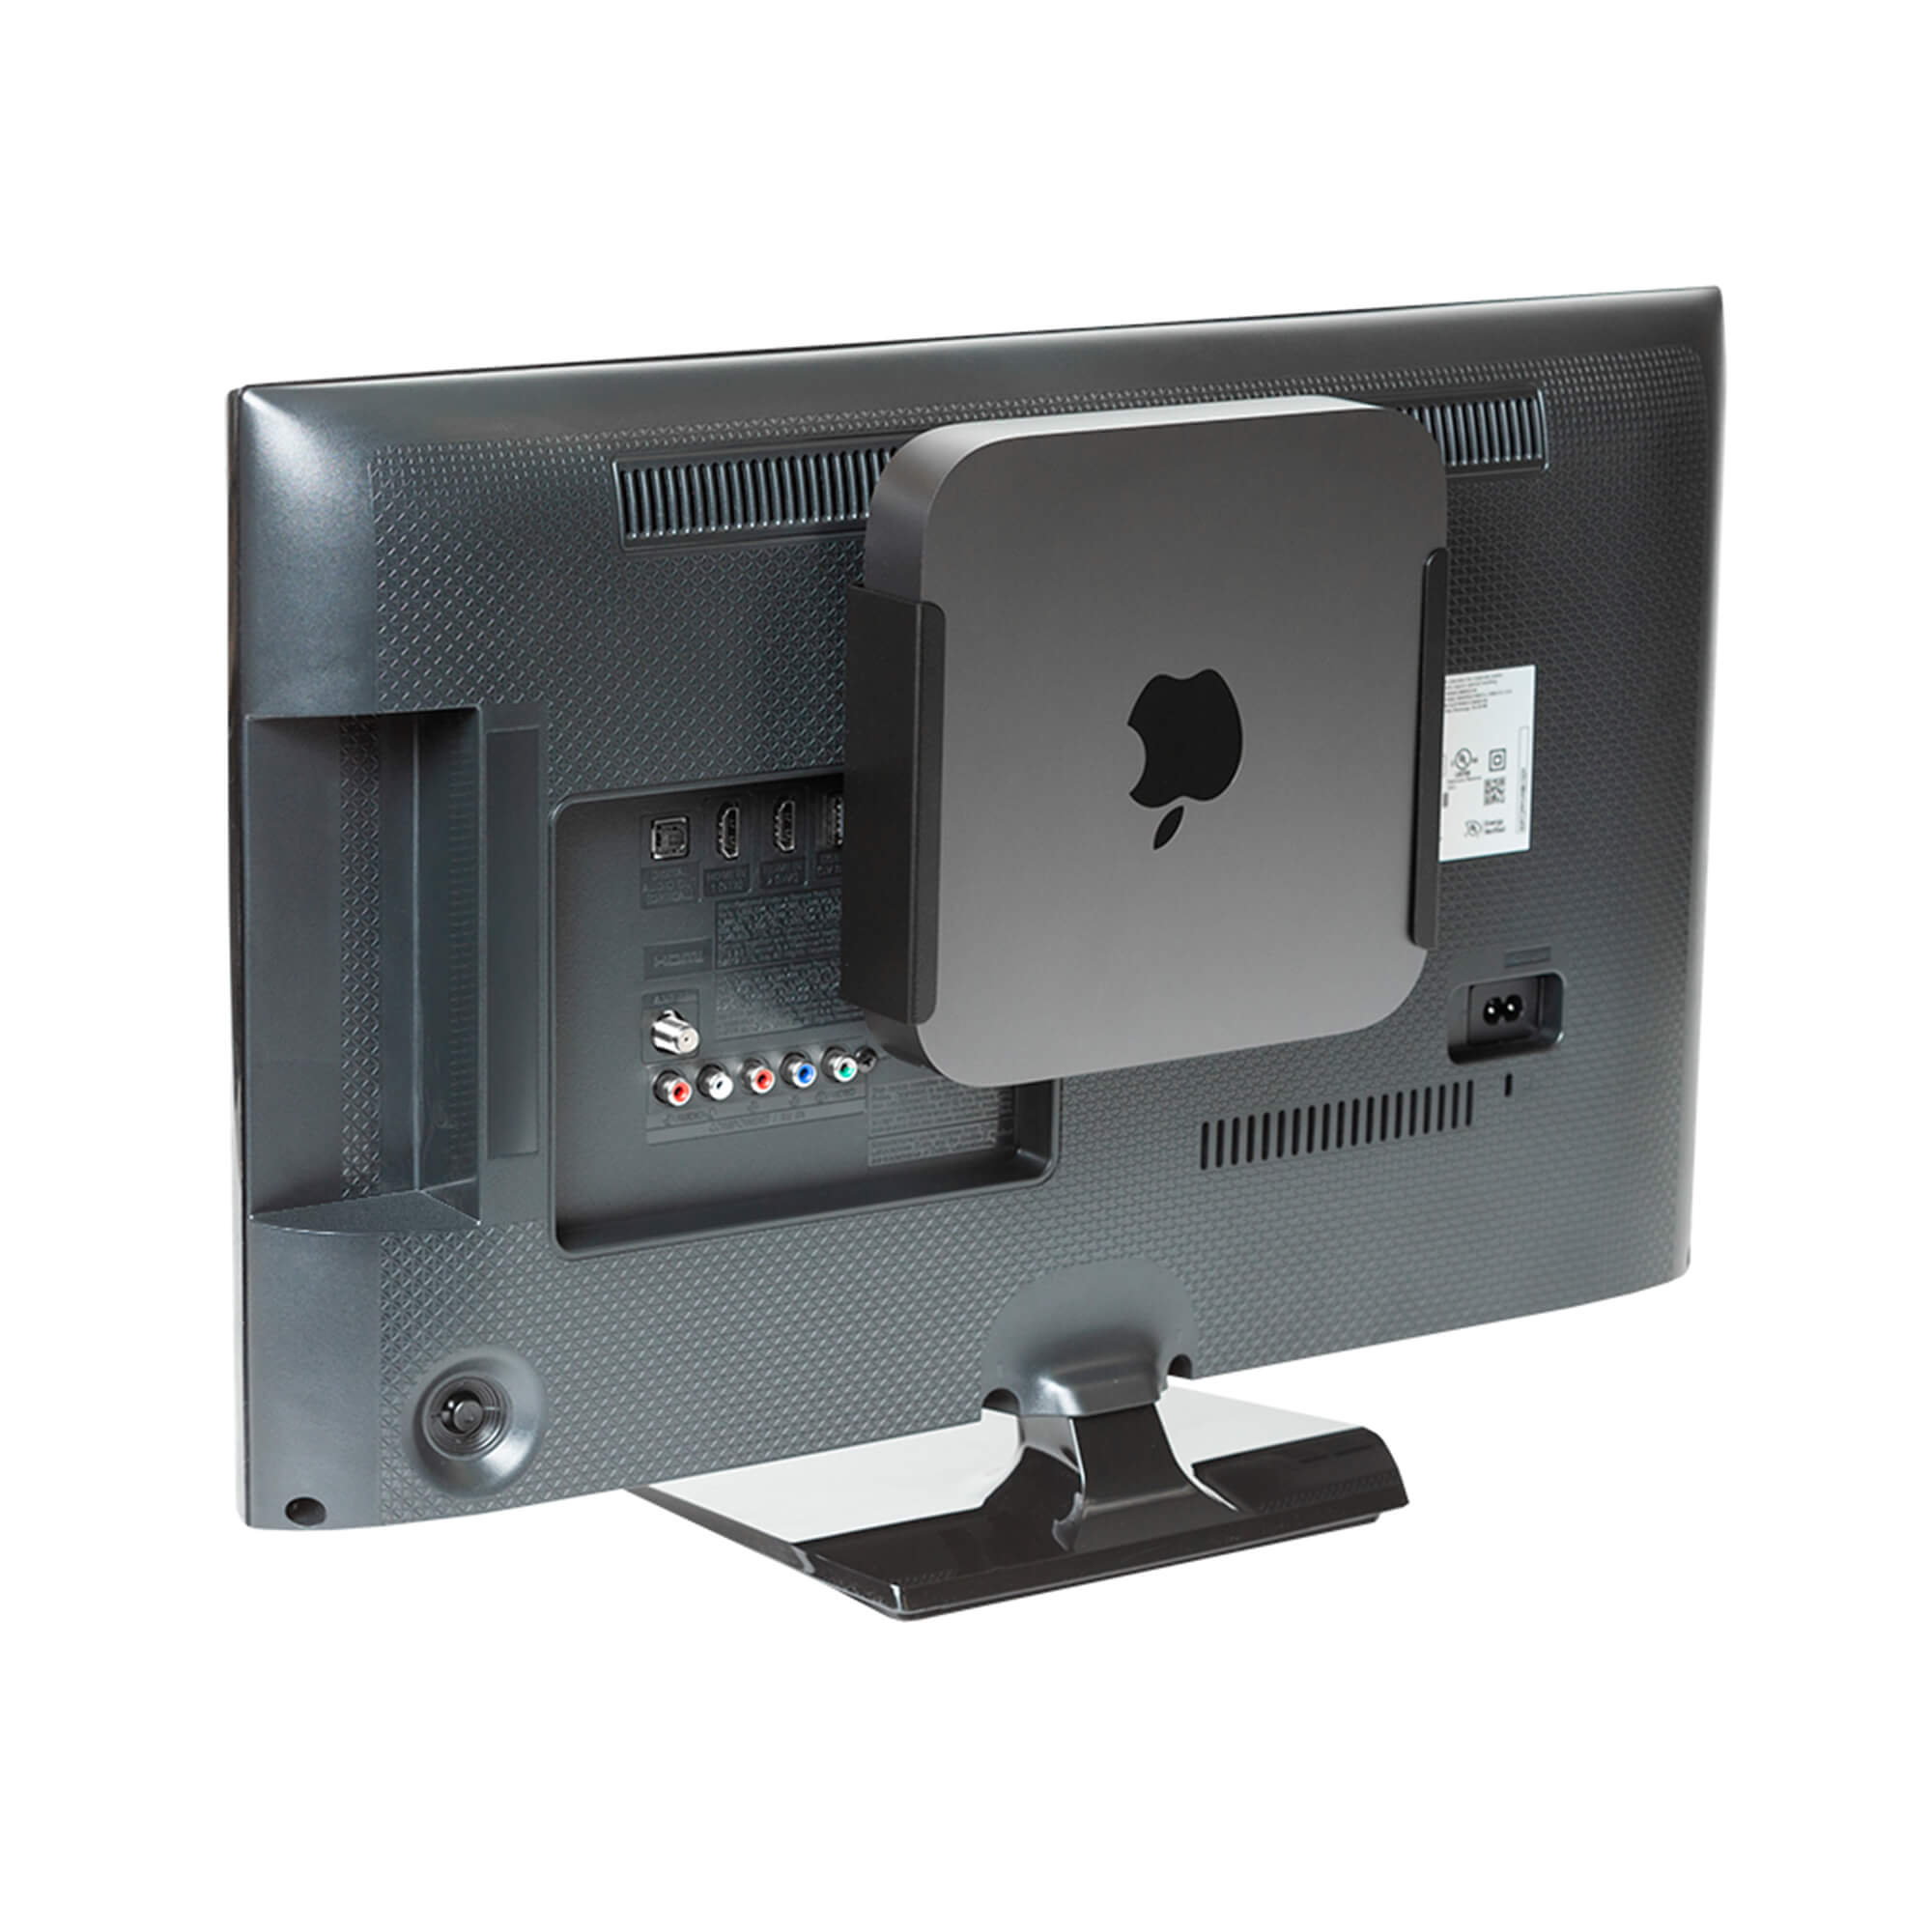 HIDEit MiniU  Apple Mac Mini Wall Mount – HIDEit Mounts